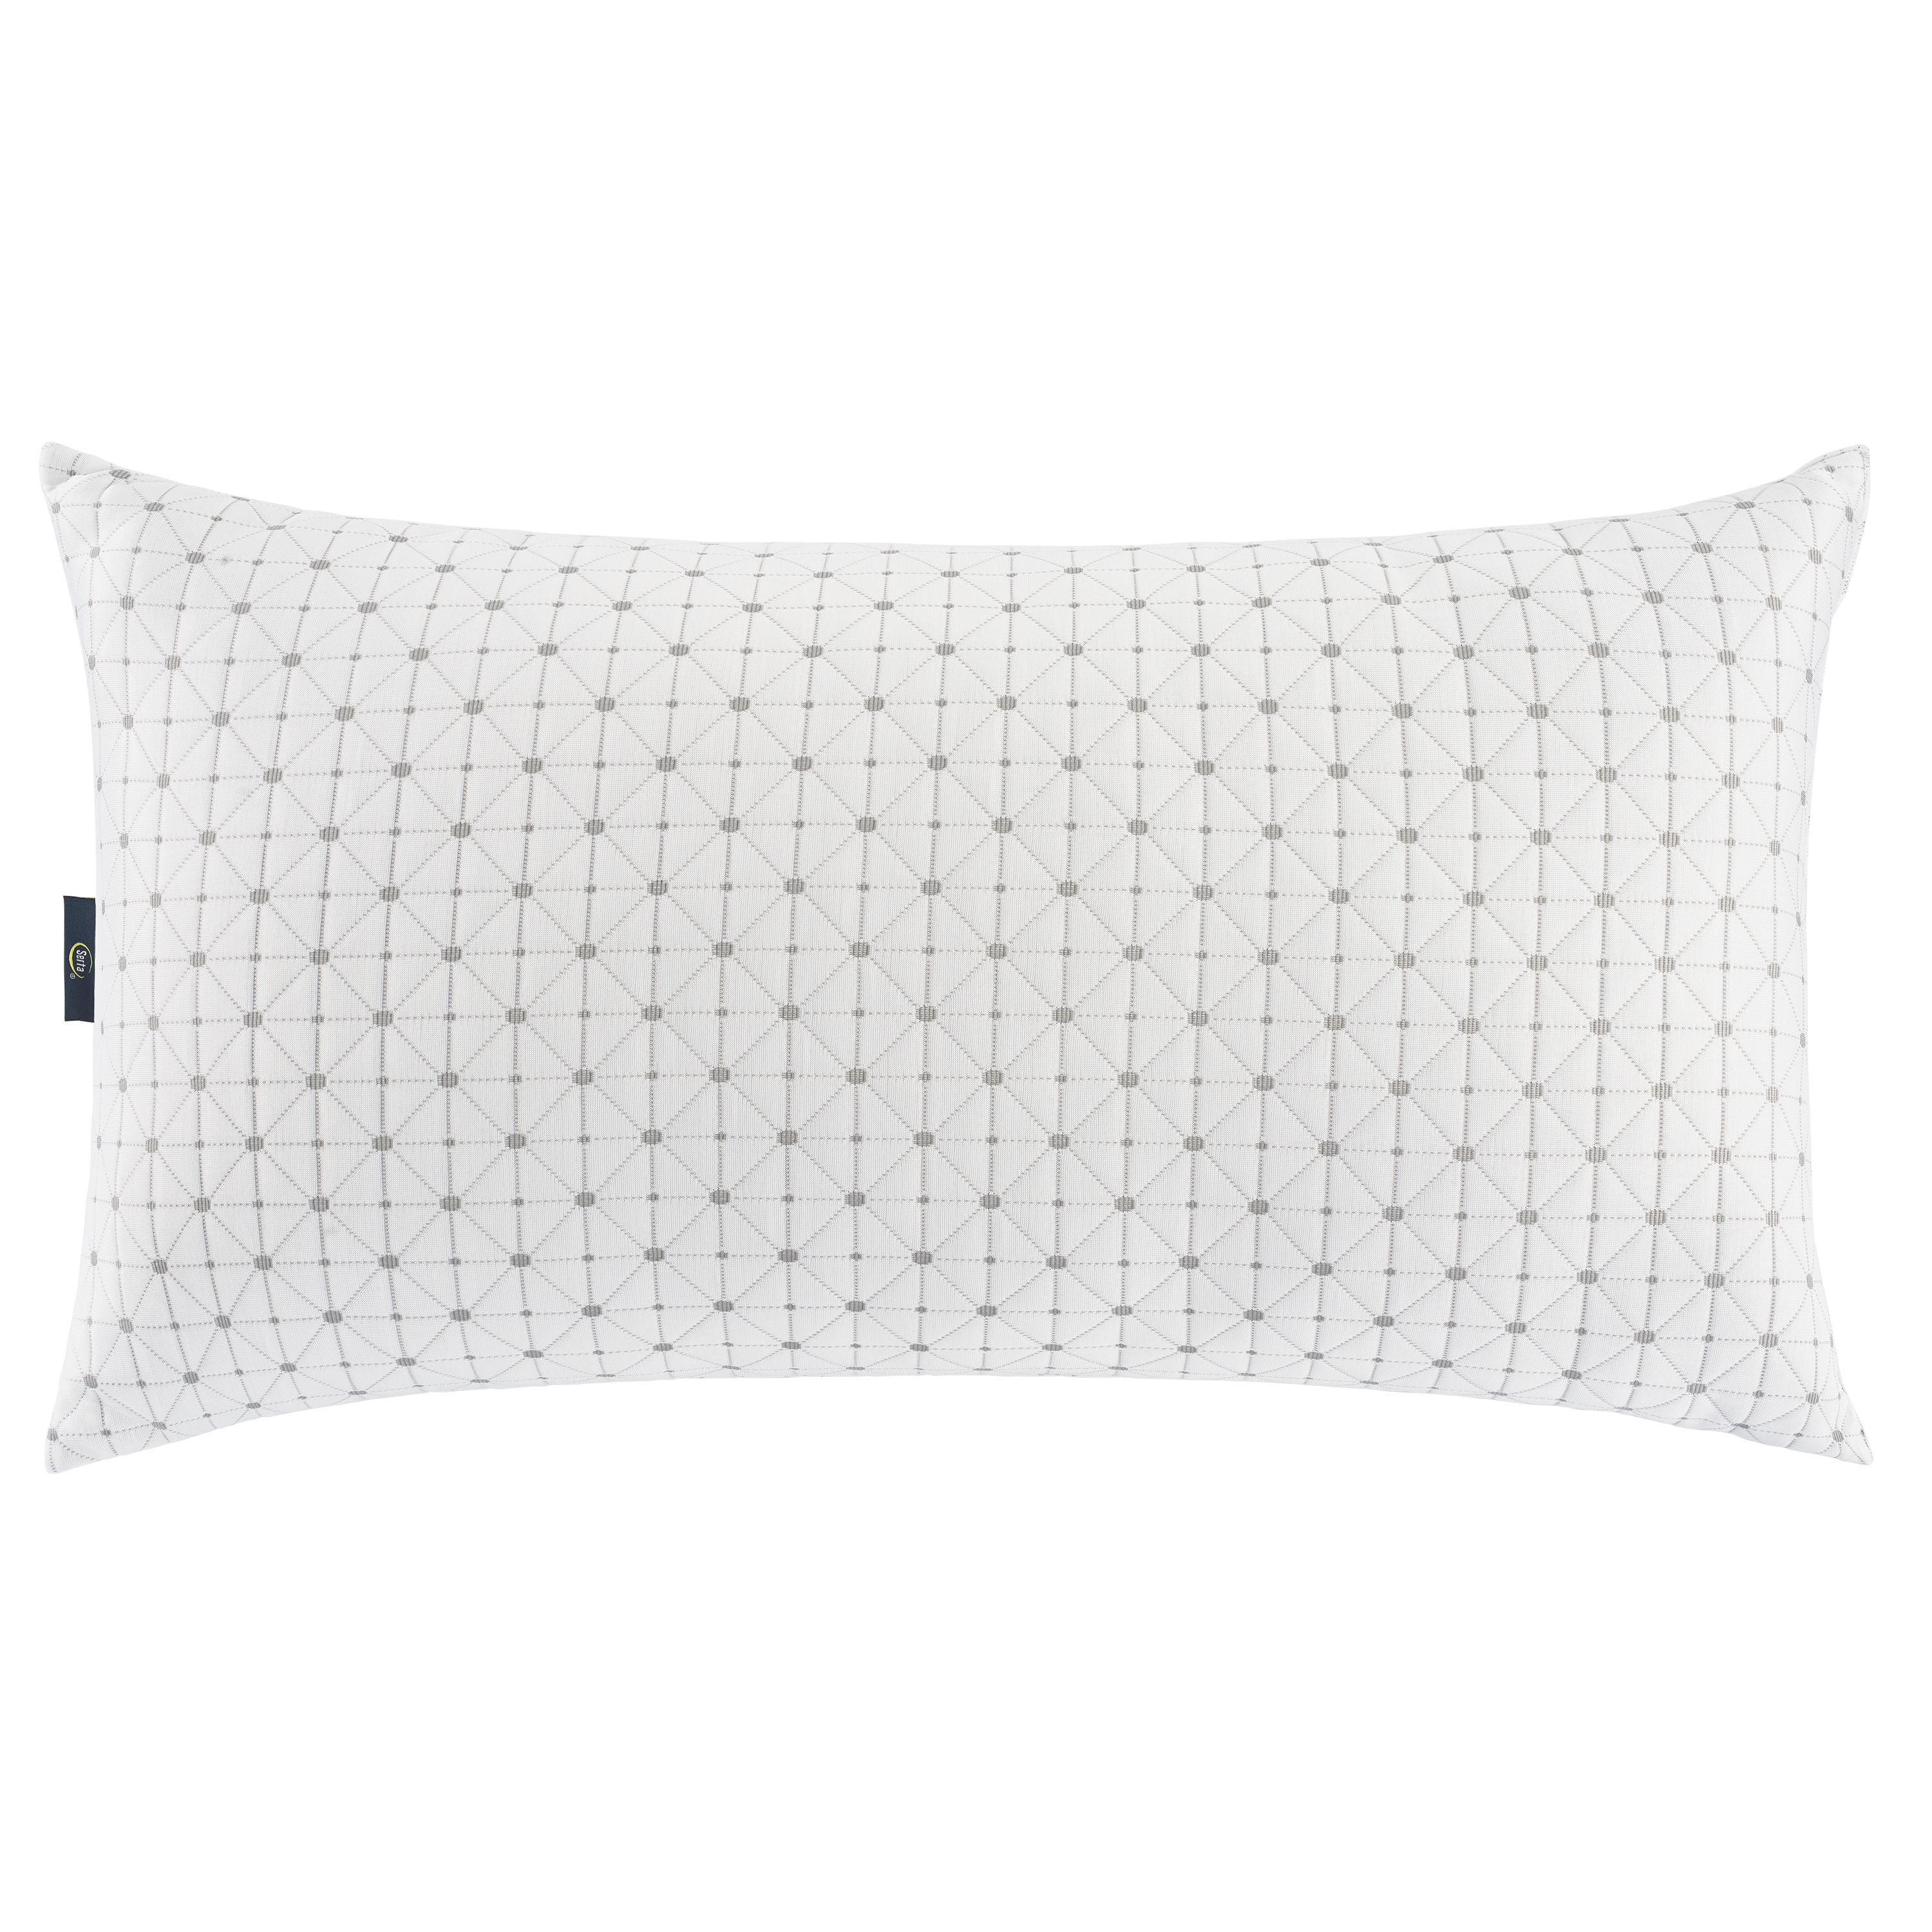 Sertapedic Charcool Bed Pillow, King, 2 Pack - image 5 of 6